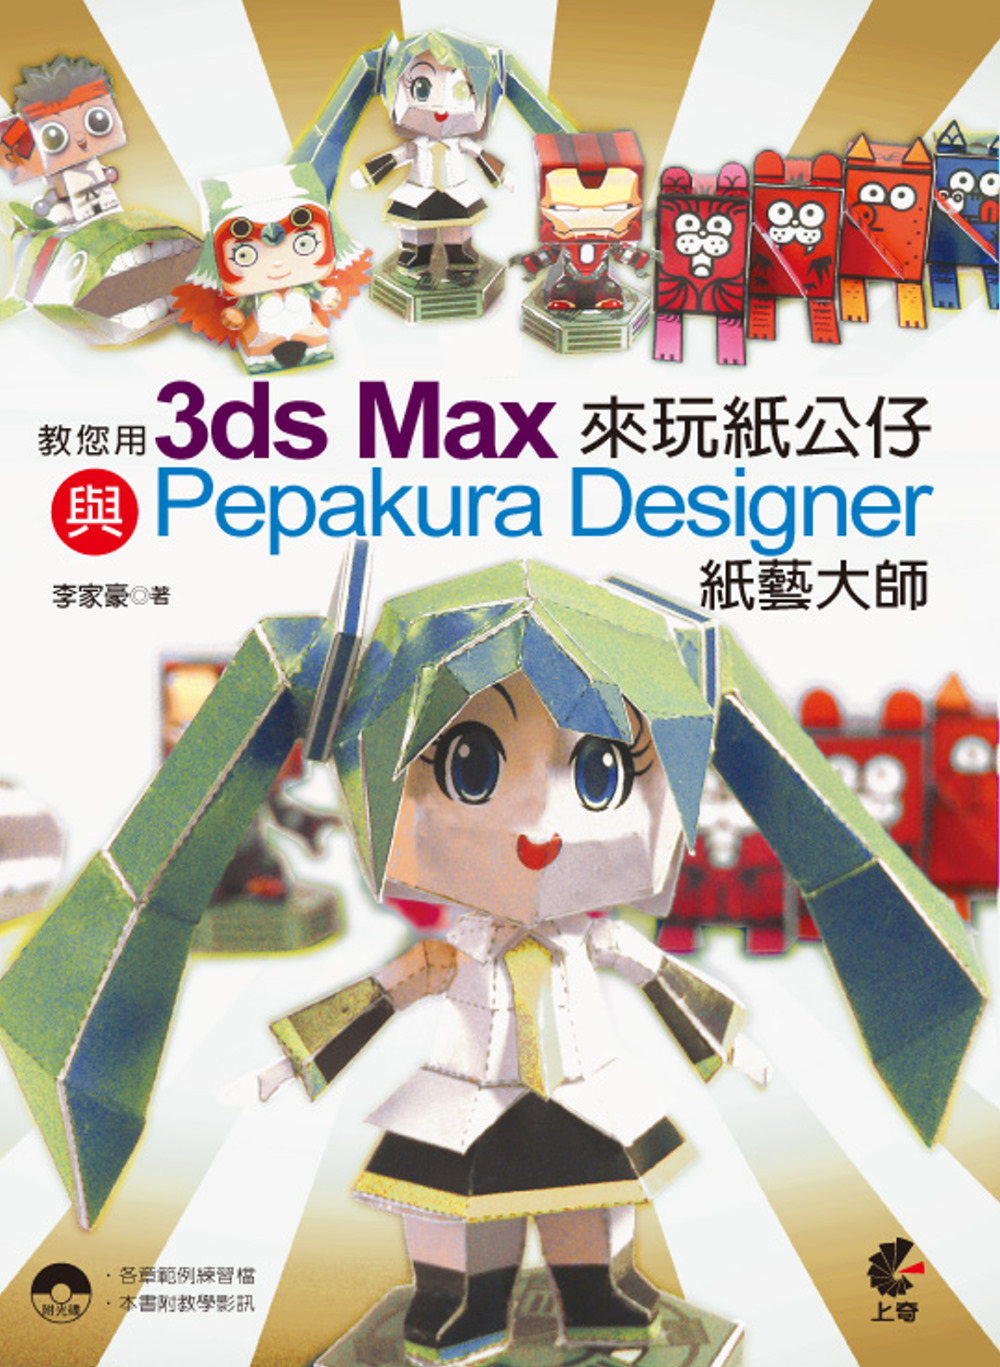 教您用3ds Max與Pepakura Designer 紙...